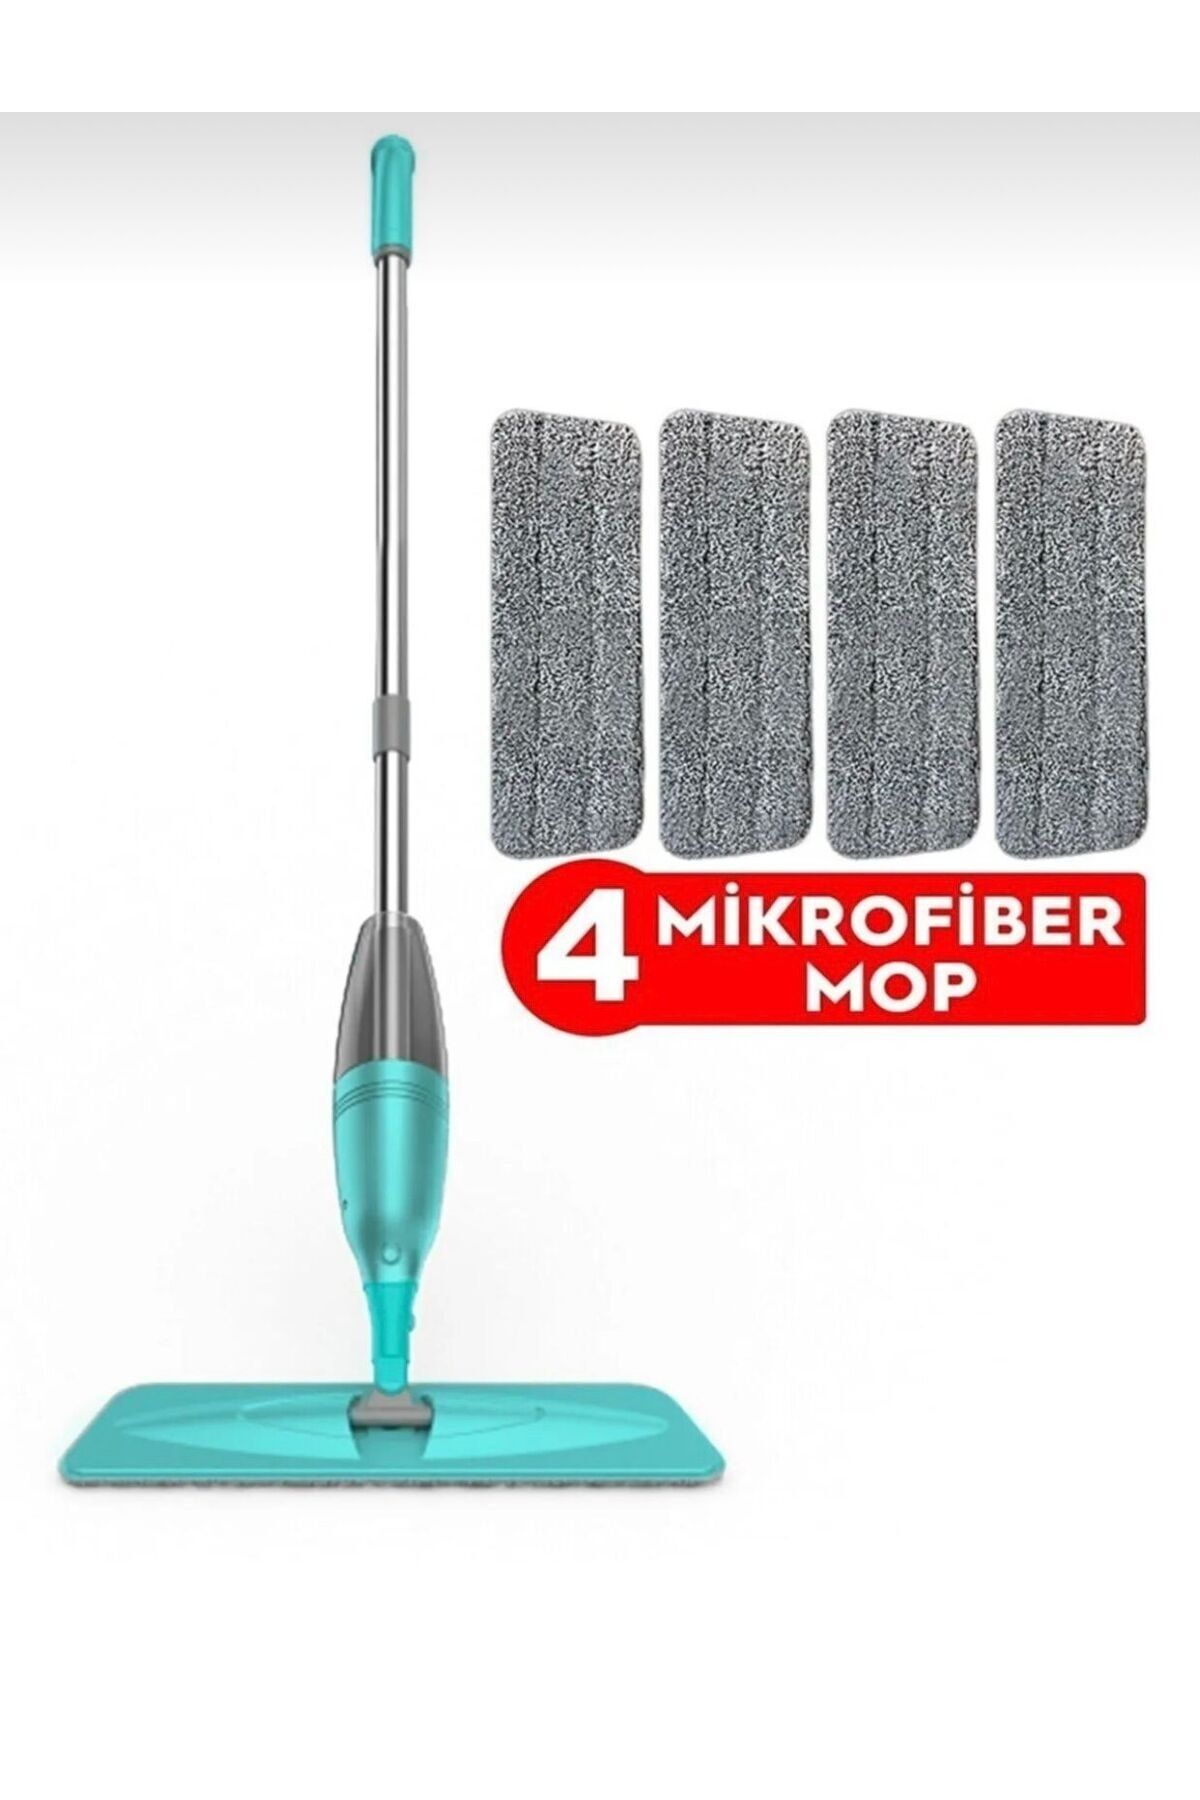 Blueeslife Sprey Mop 4 Mikrofiber Mop